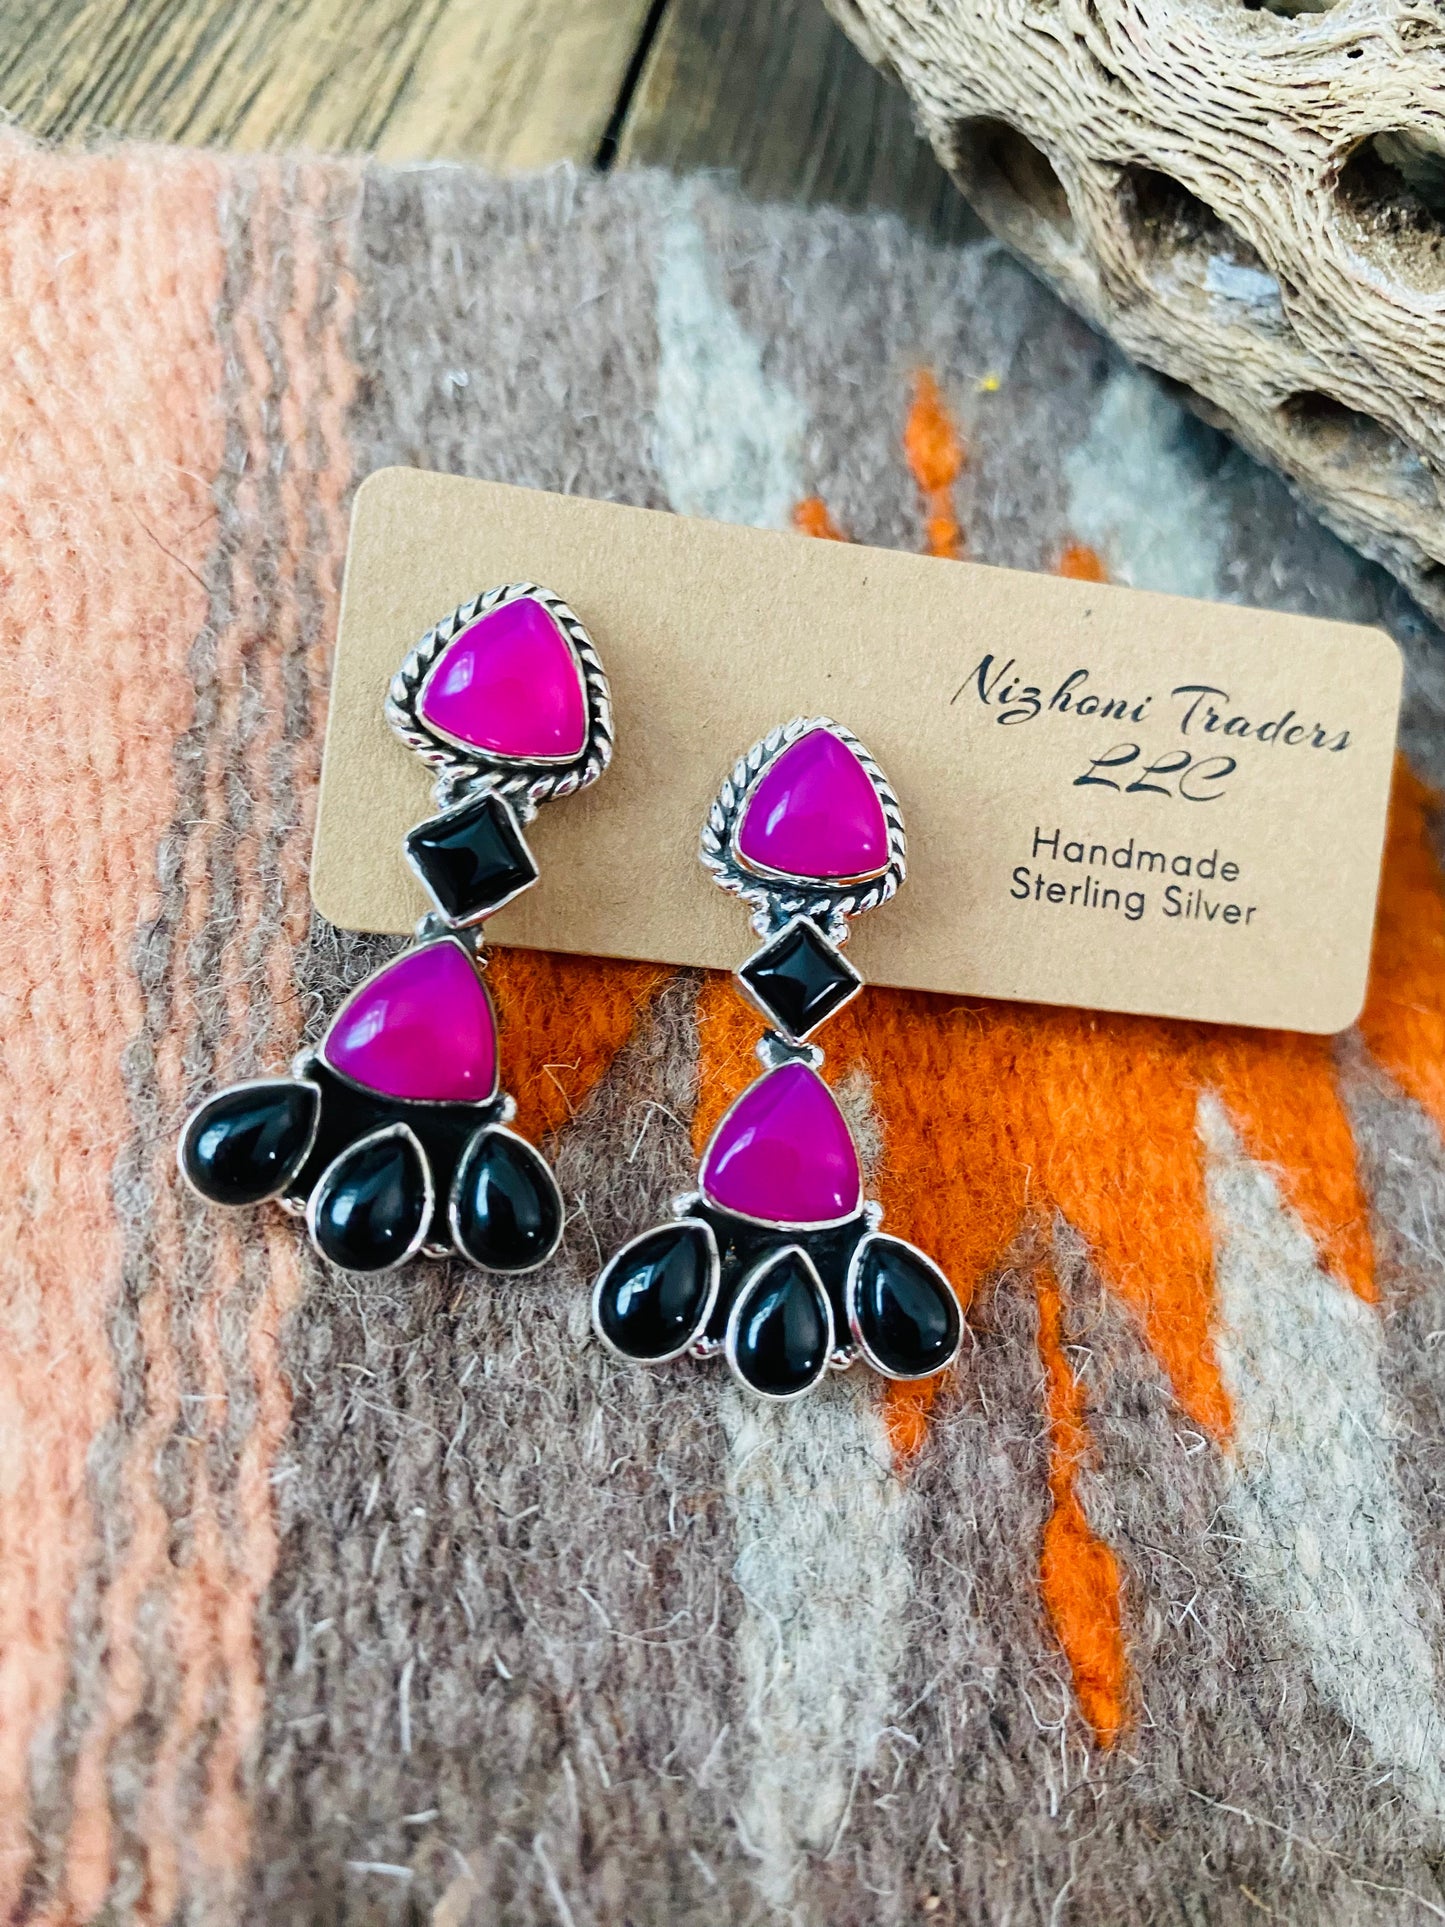 Handmade Pink & Black Onyx Sterling Silver Post Earrings Signed Nizhoni